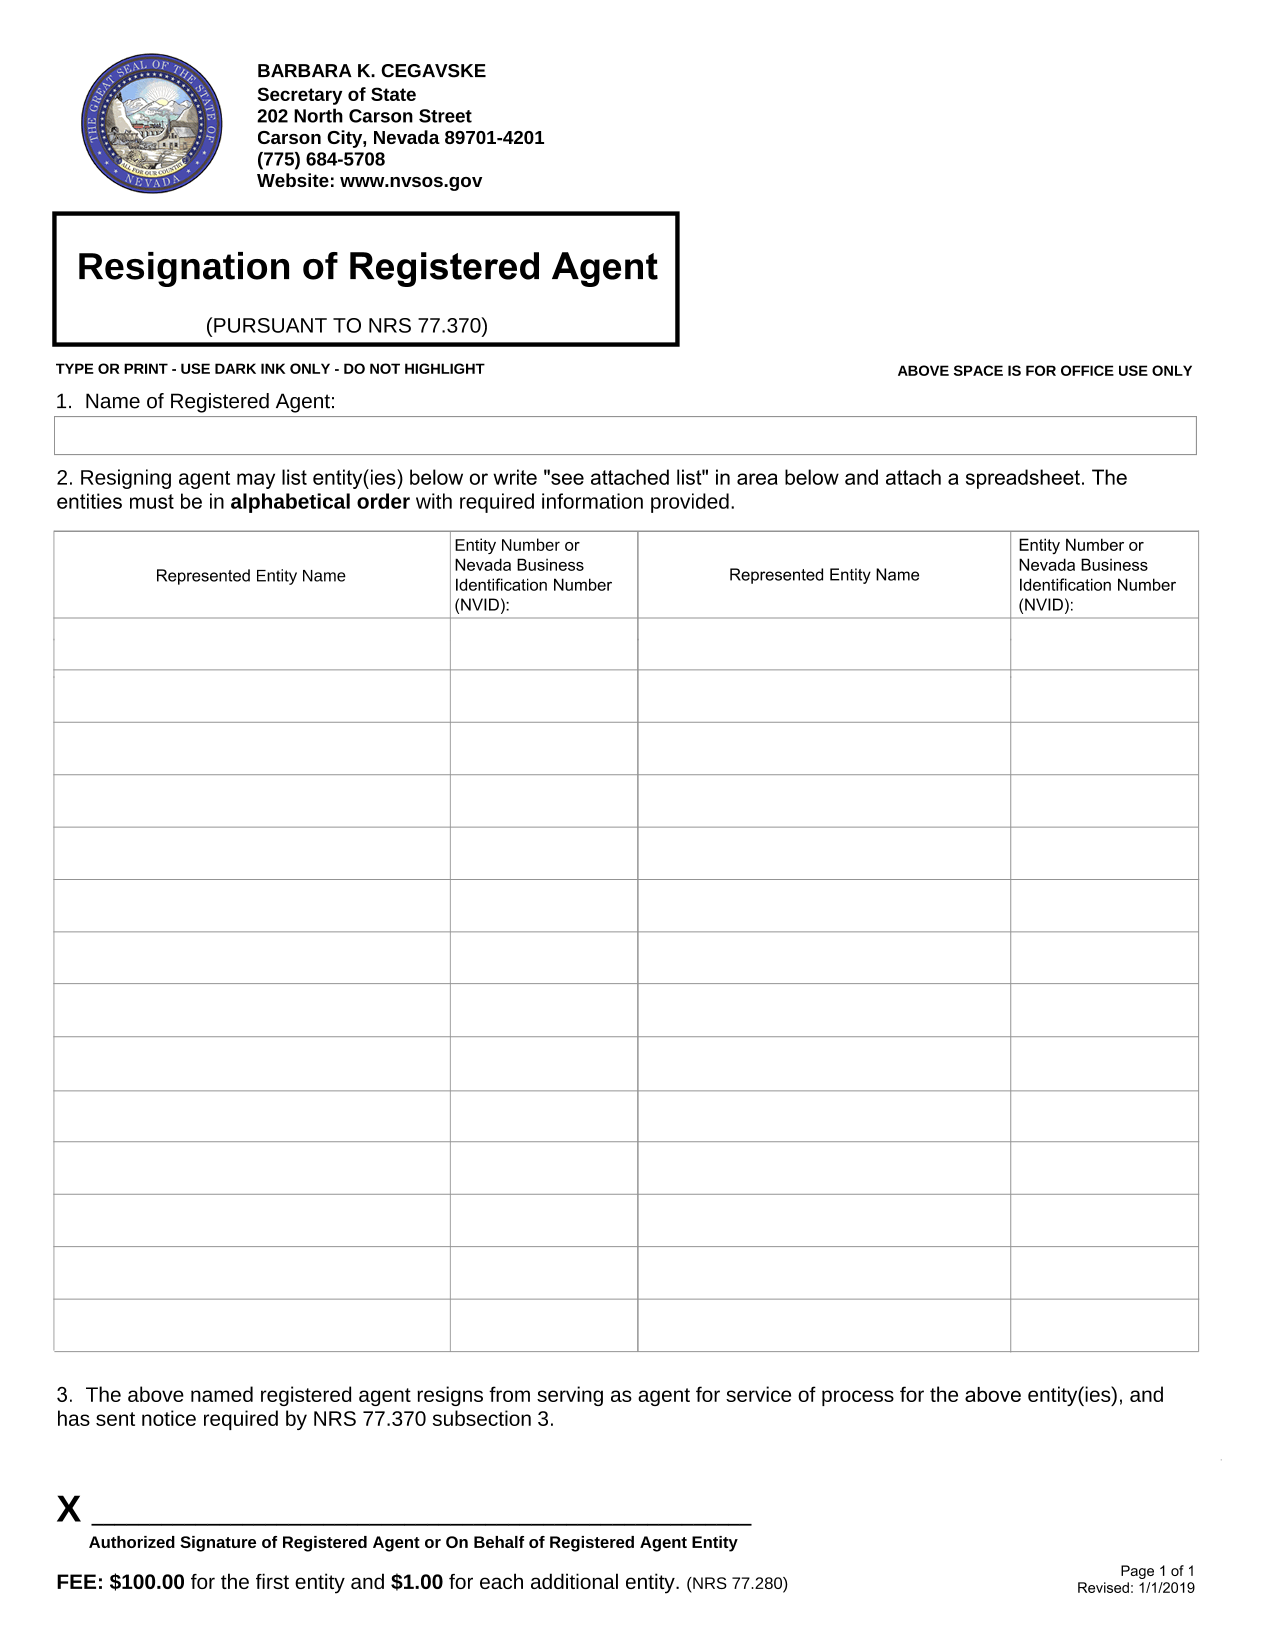 statement-of-resignation-of-registered-agent-